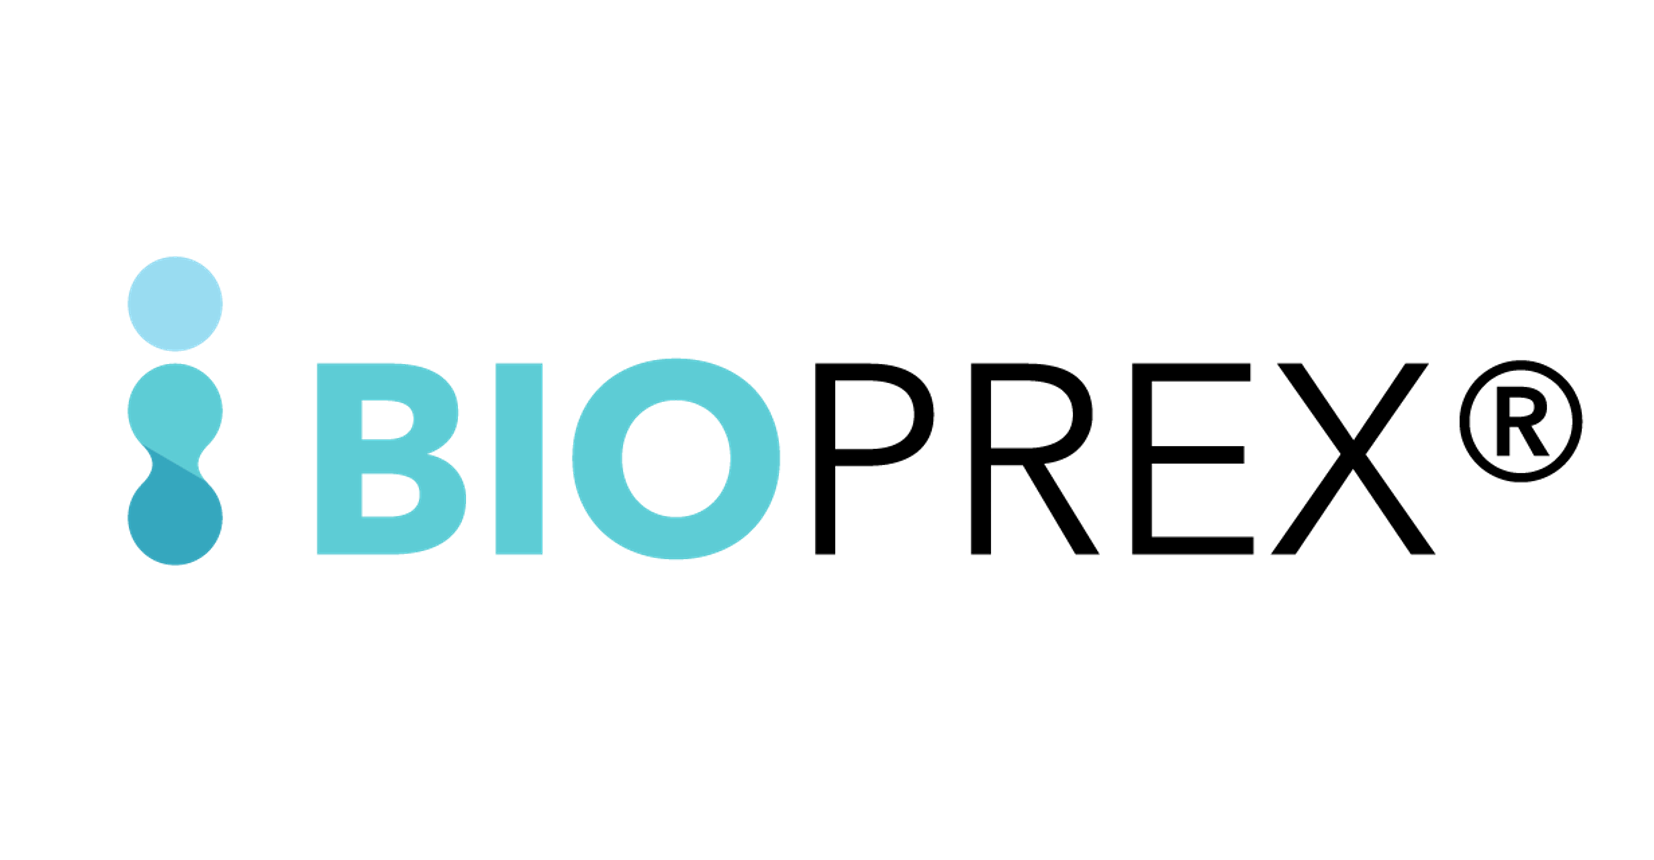 Bioprex-logo.png